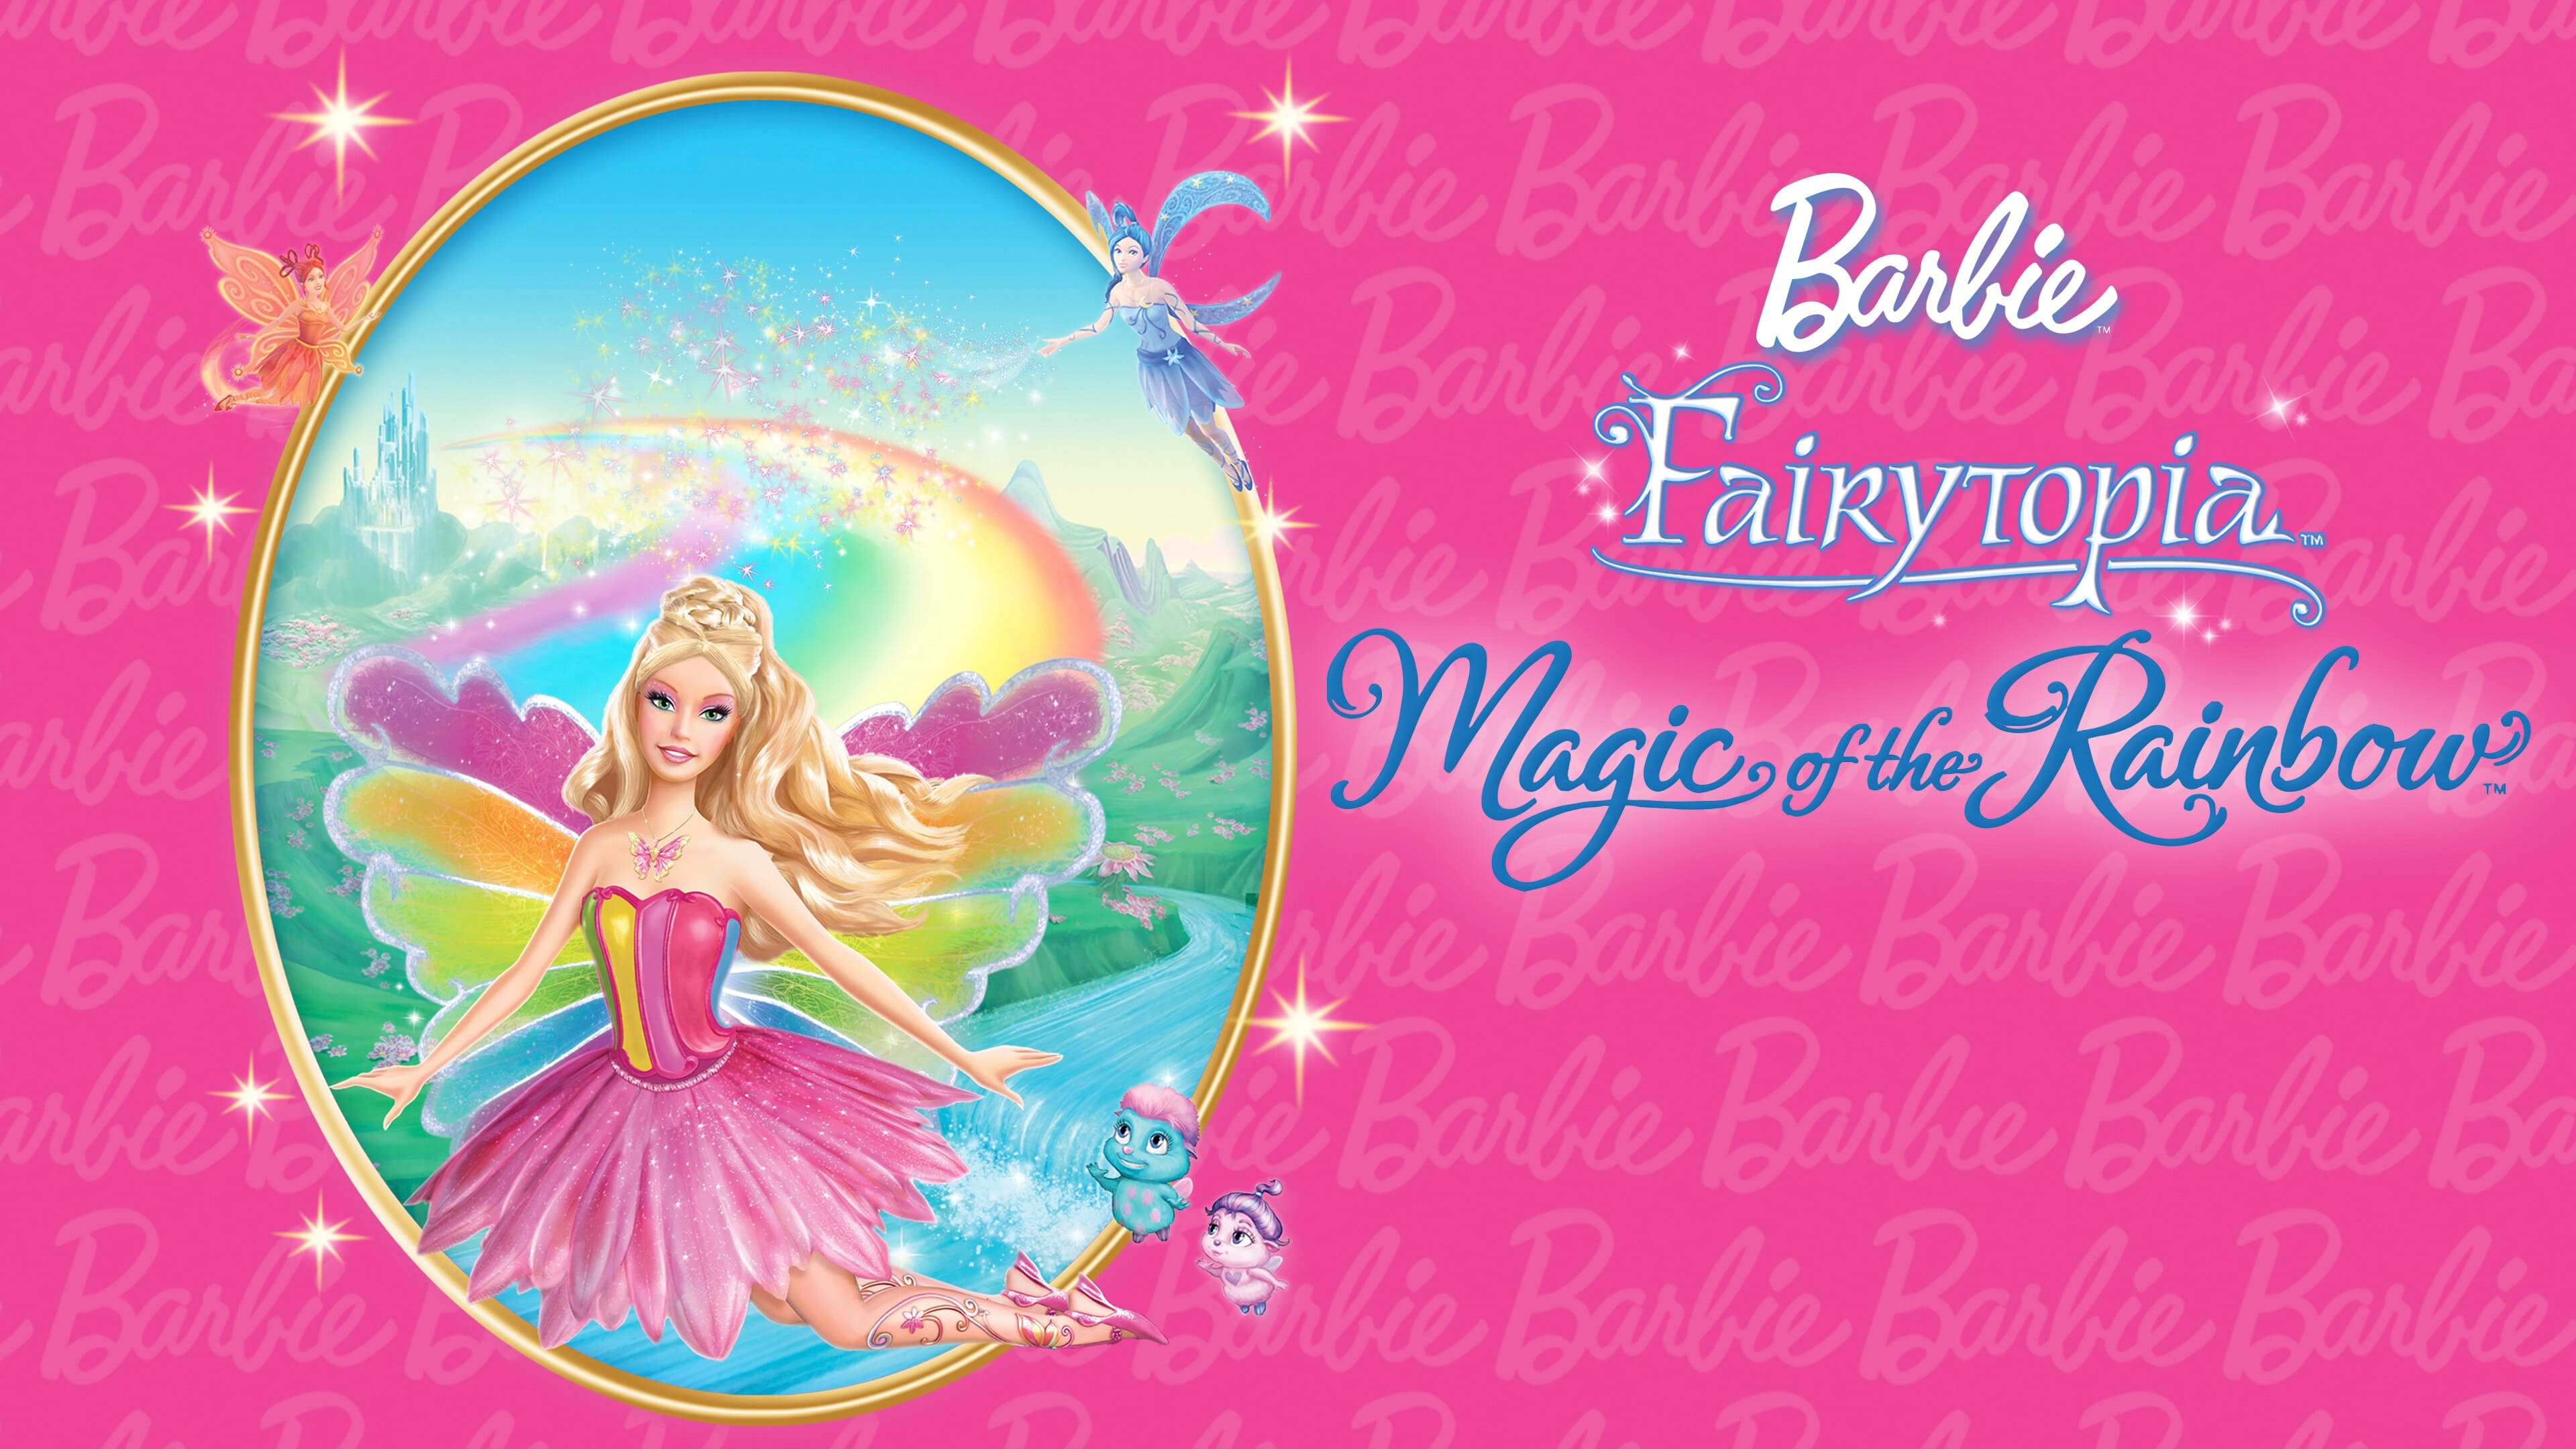 Barbie Fairytopia: Regnbuens magi